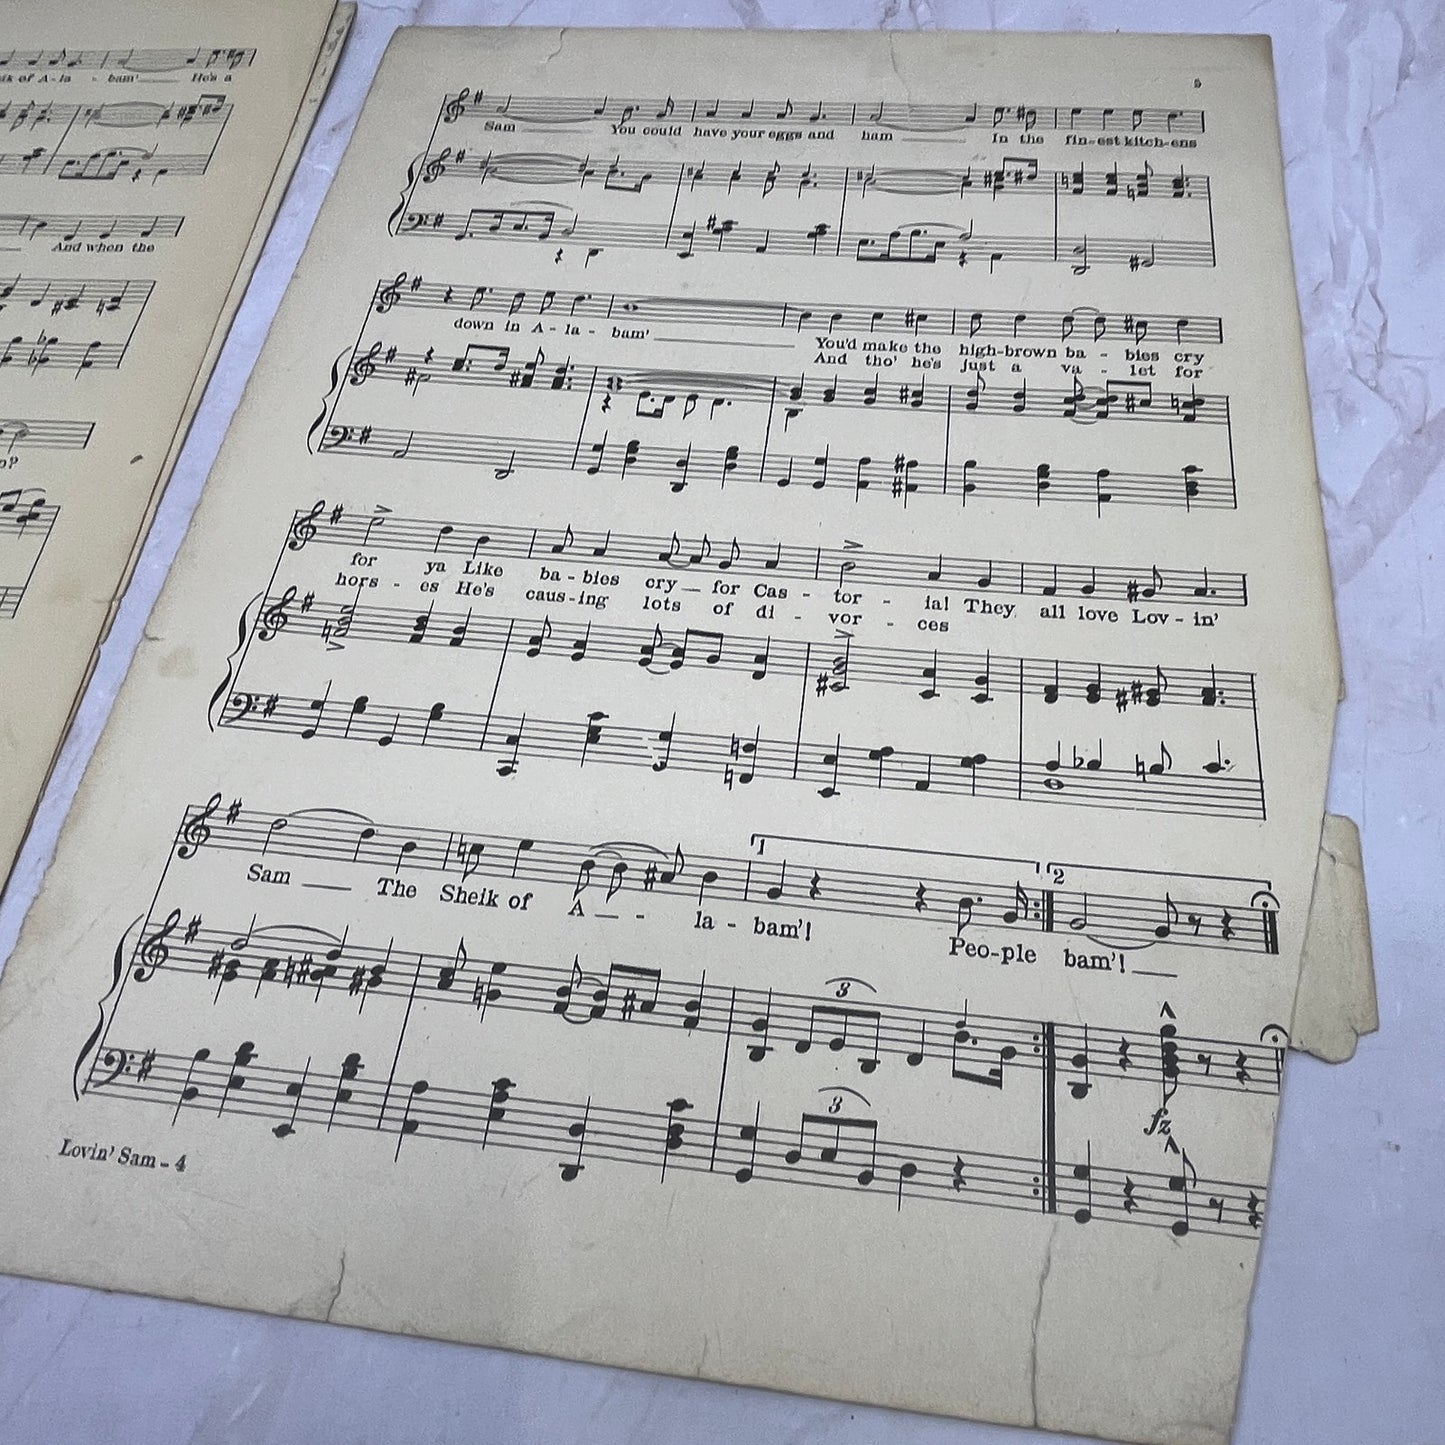 1922 Lovin' Sam The Sheik of Alabam Jack Yellen Florence Brady Sheet Music Ti5